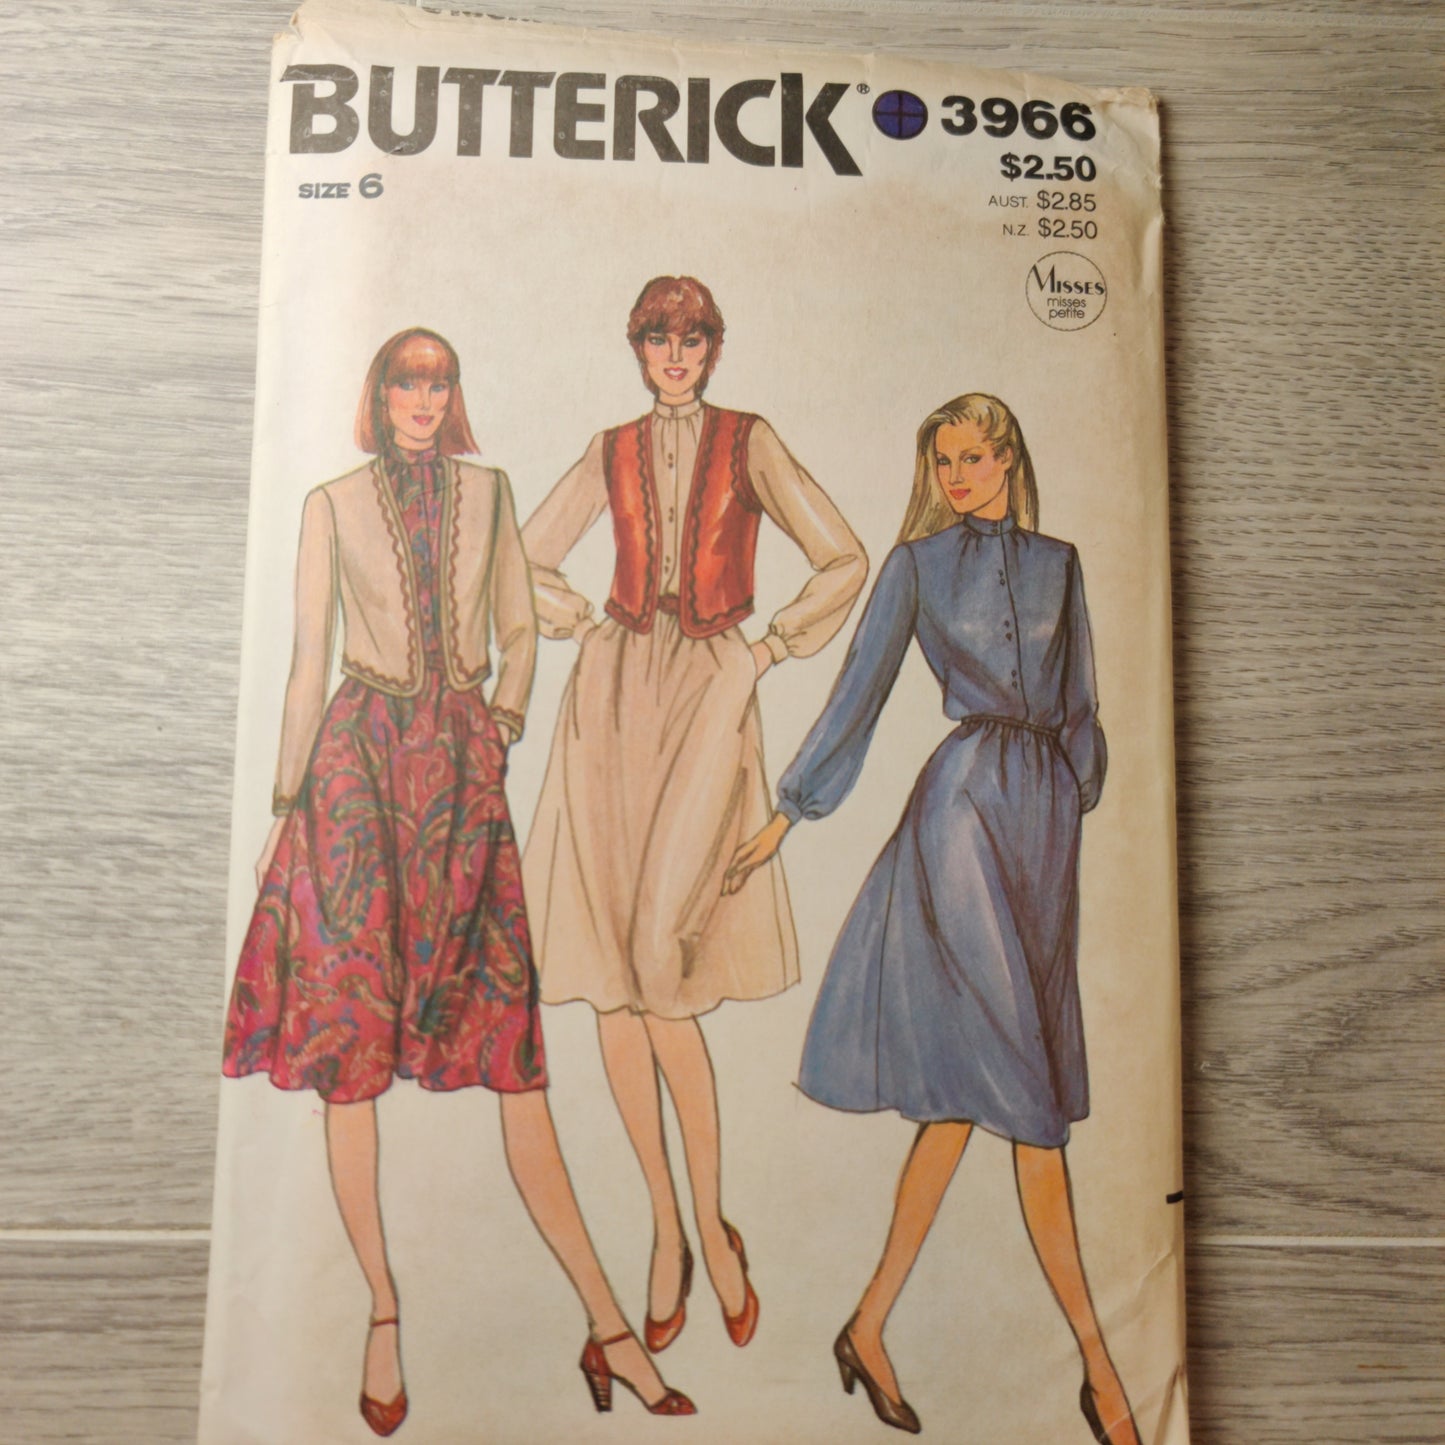 Butterick 3966 Size 6